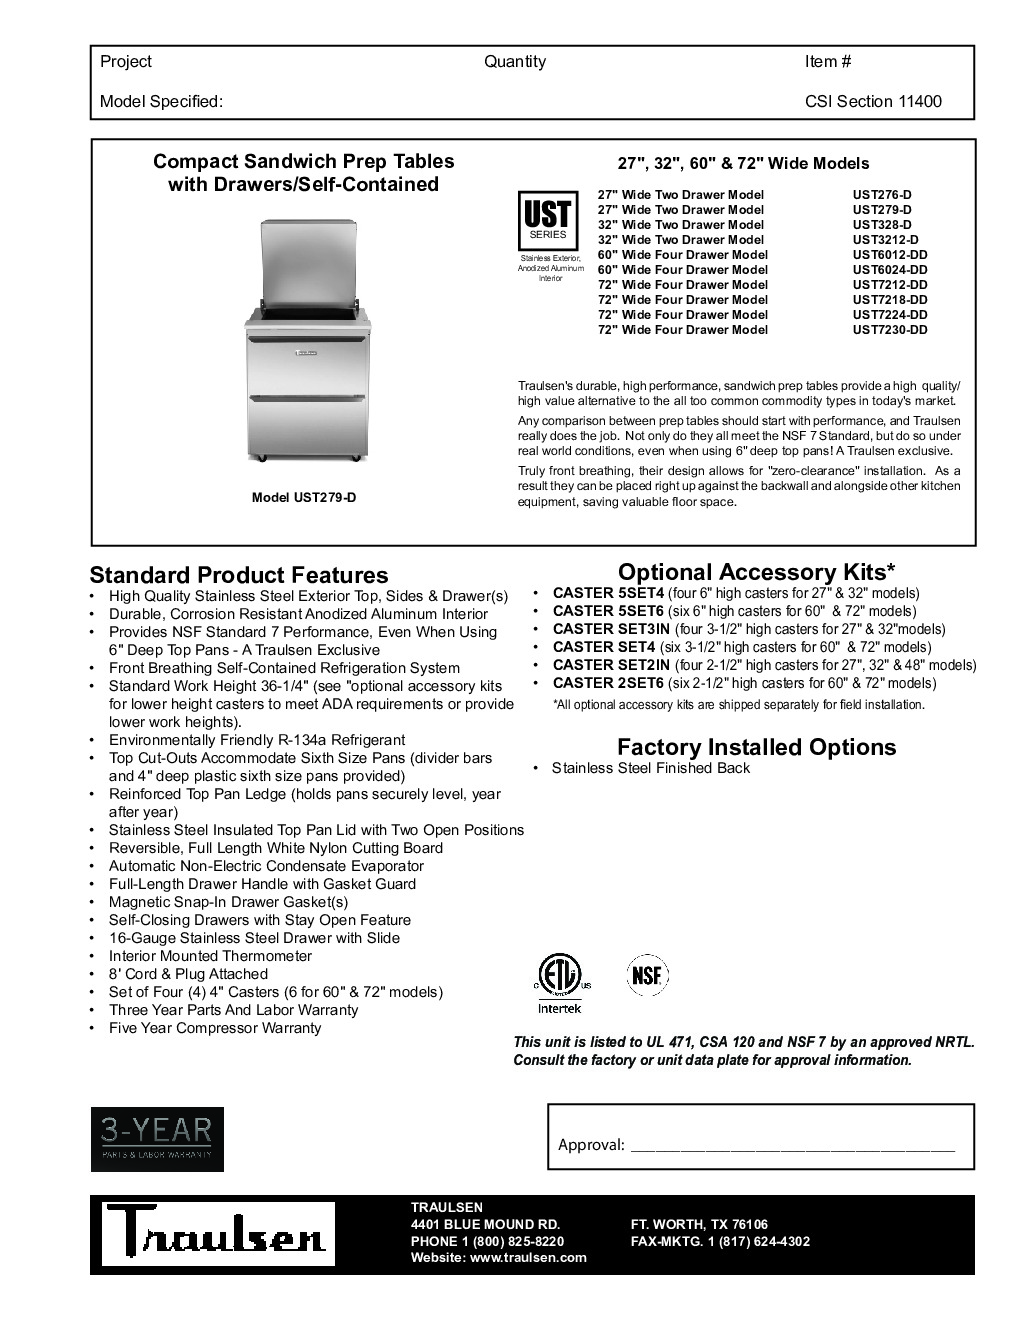 Traulsen UST7230-DD-SB Sandwich / Salad Unit Refrigerated Counter